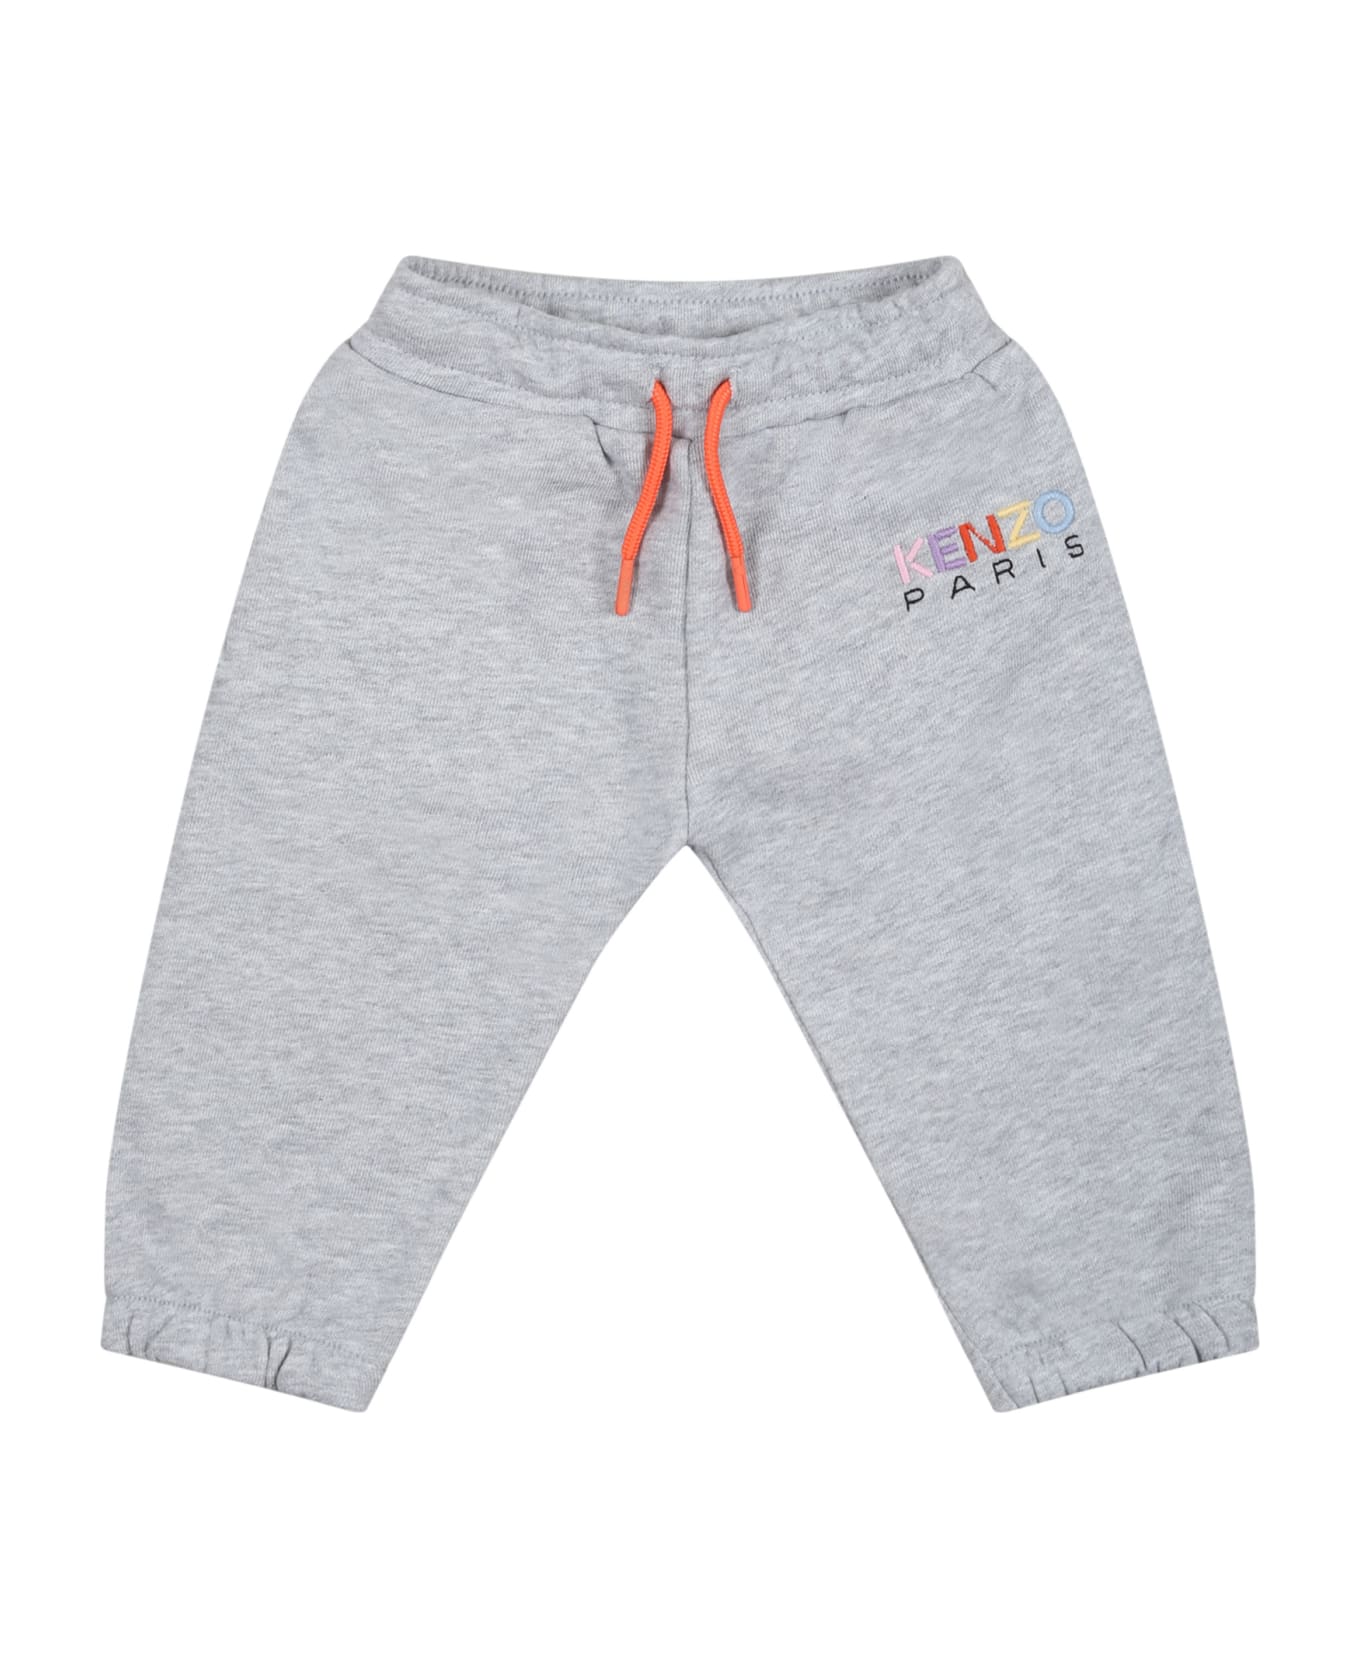 Kenzo Kids Grey Sweatpants For Babies With Logo - Grey